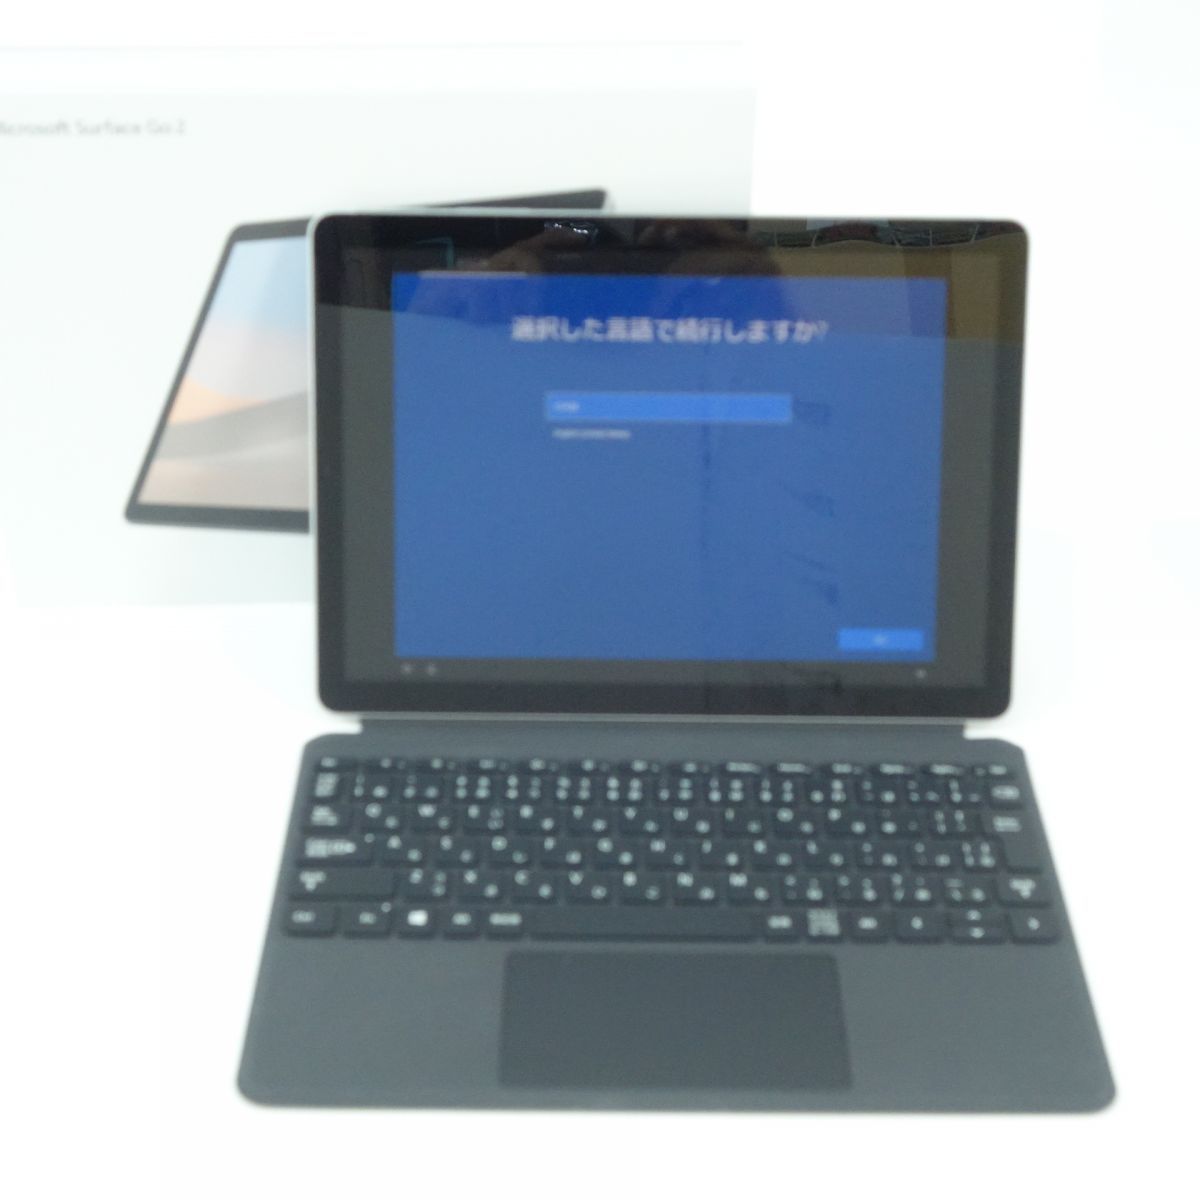 Surface Go2 STQ-00012 タイプカバー付-